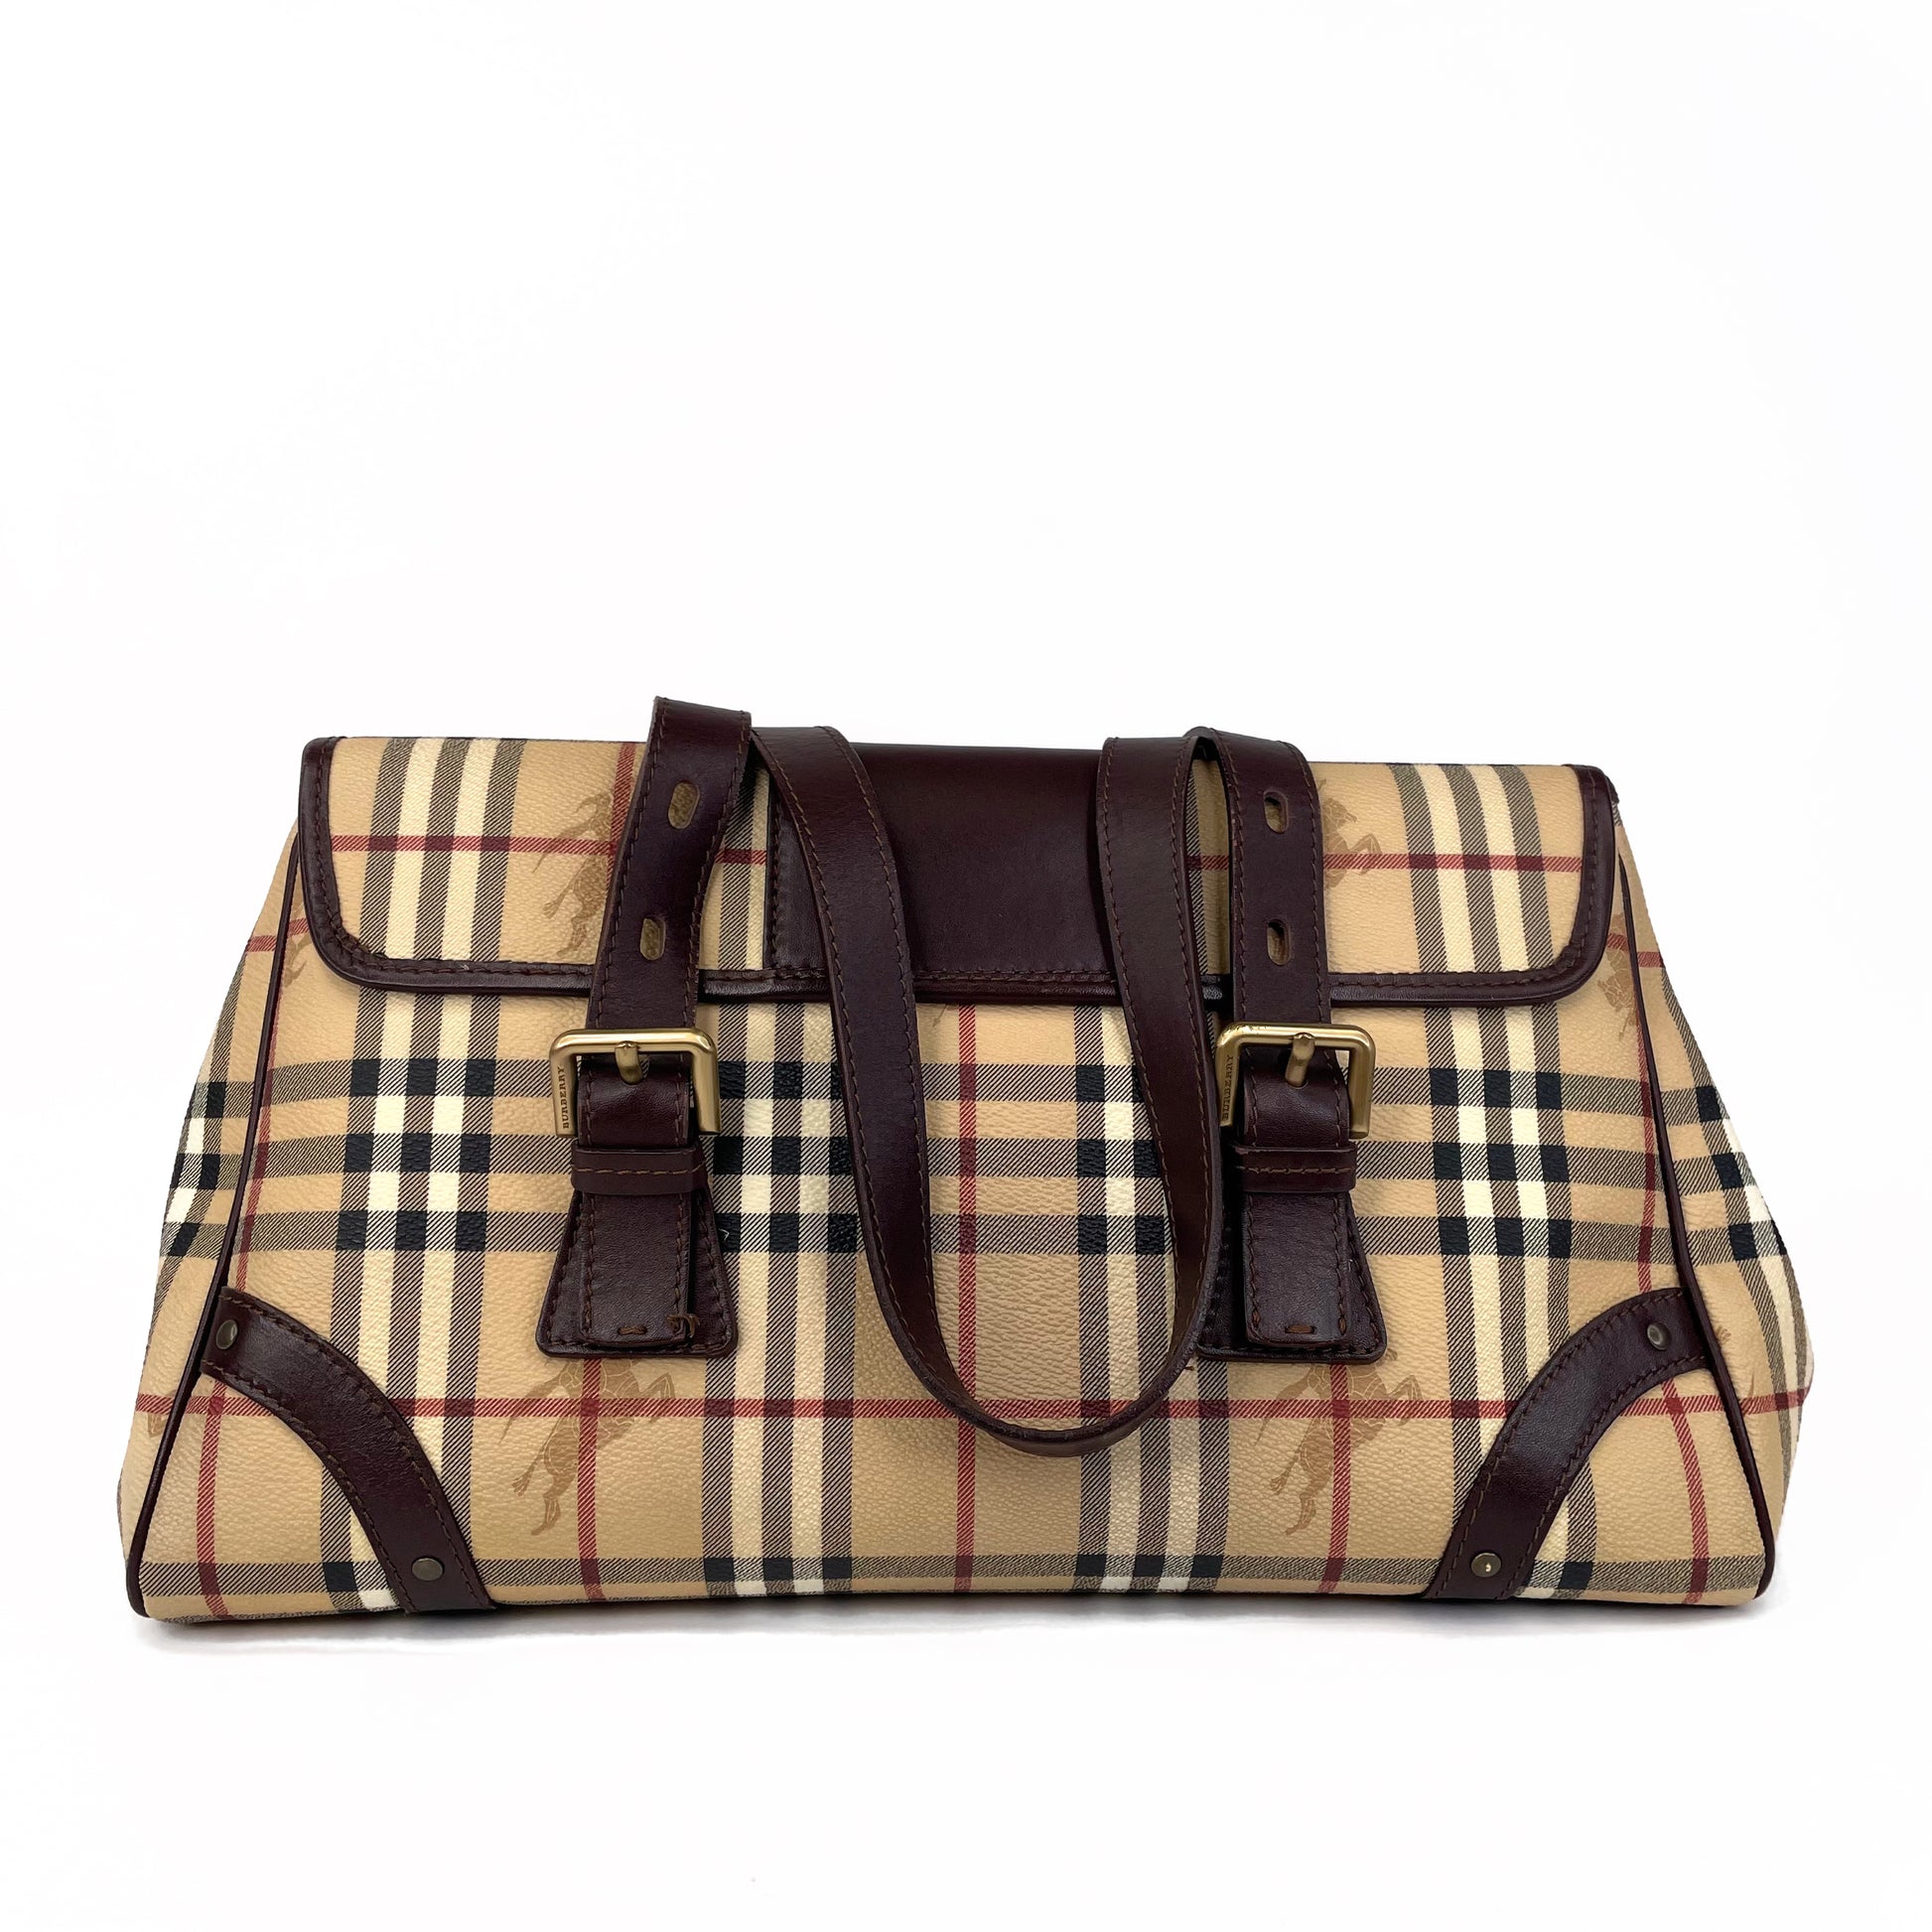 Authentic Vintage BURBERRY Haymarket Check Shoulder Bag Preowned